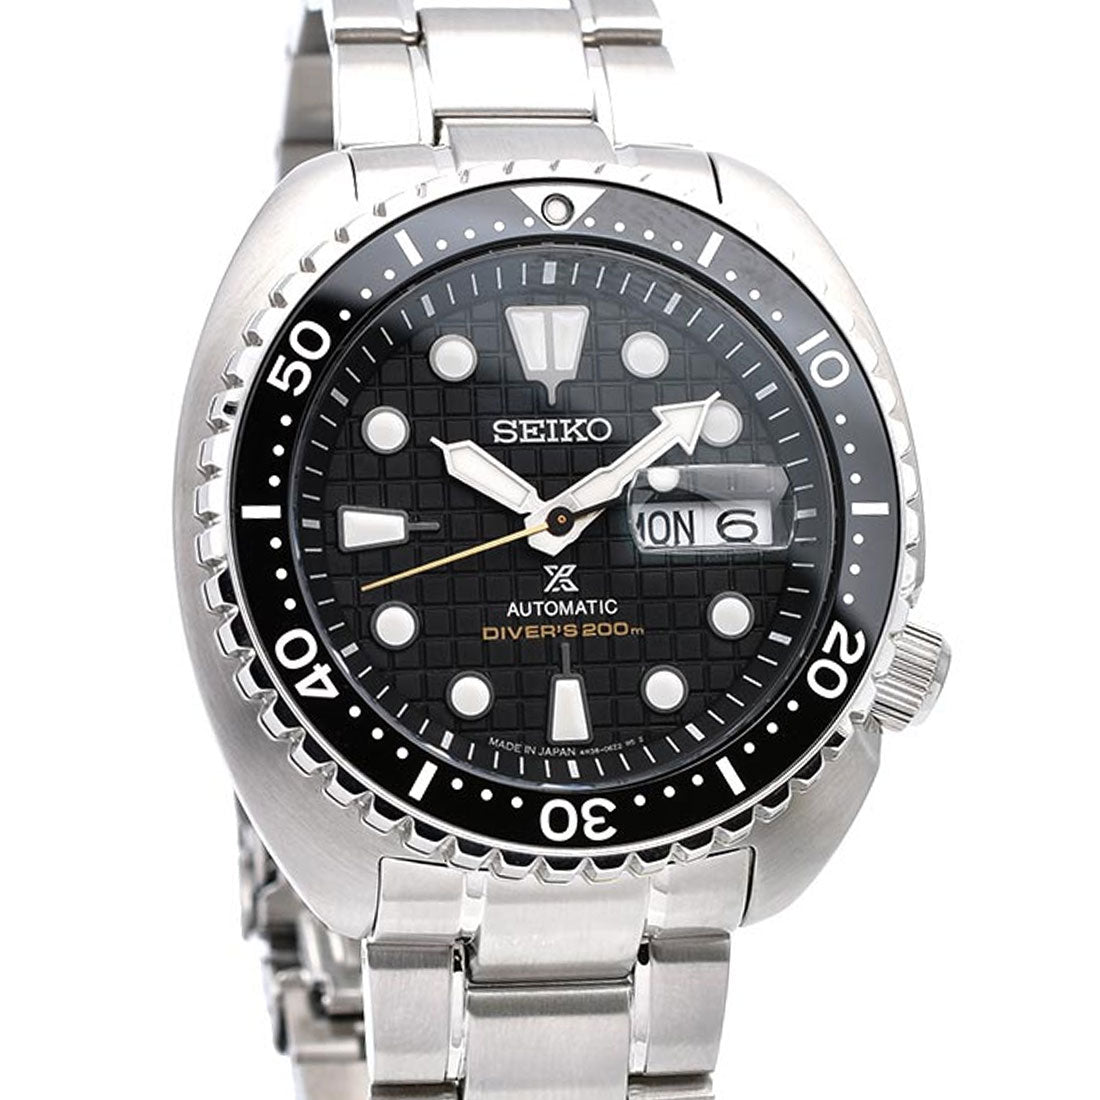 Seiko King Turtle JDM Prospex Automatic Divers Watch SBDY049 -Seiko